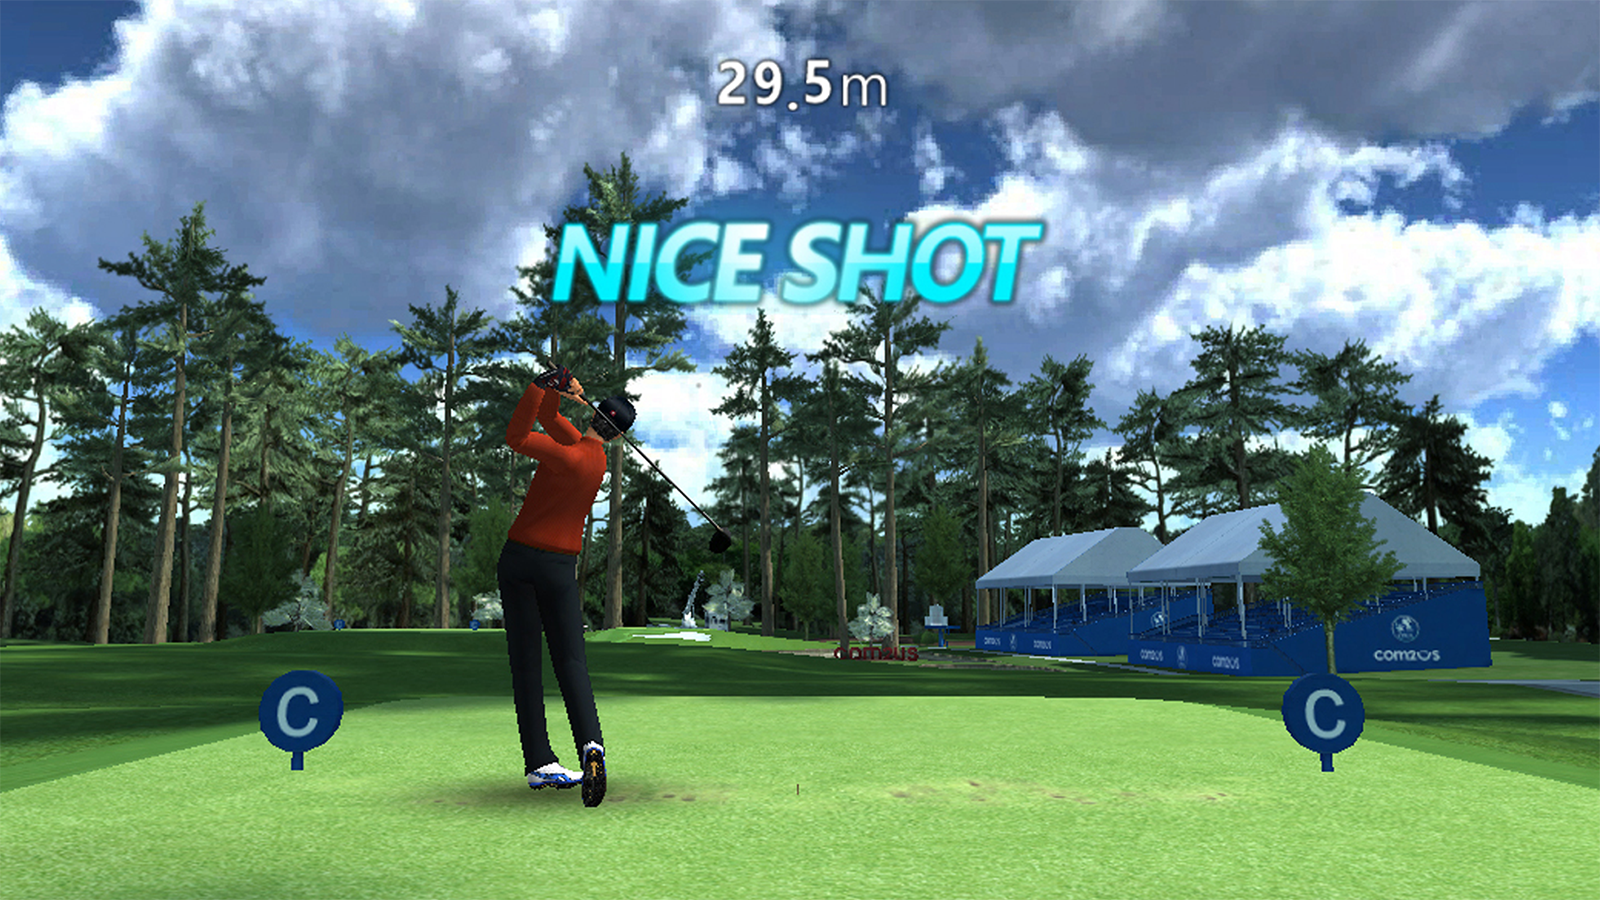 高尔夫之星 screenshot game